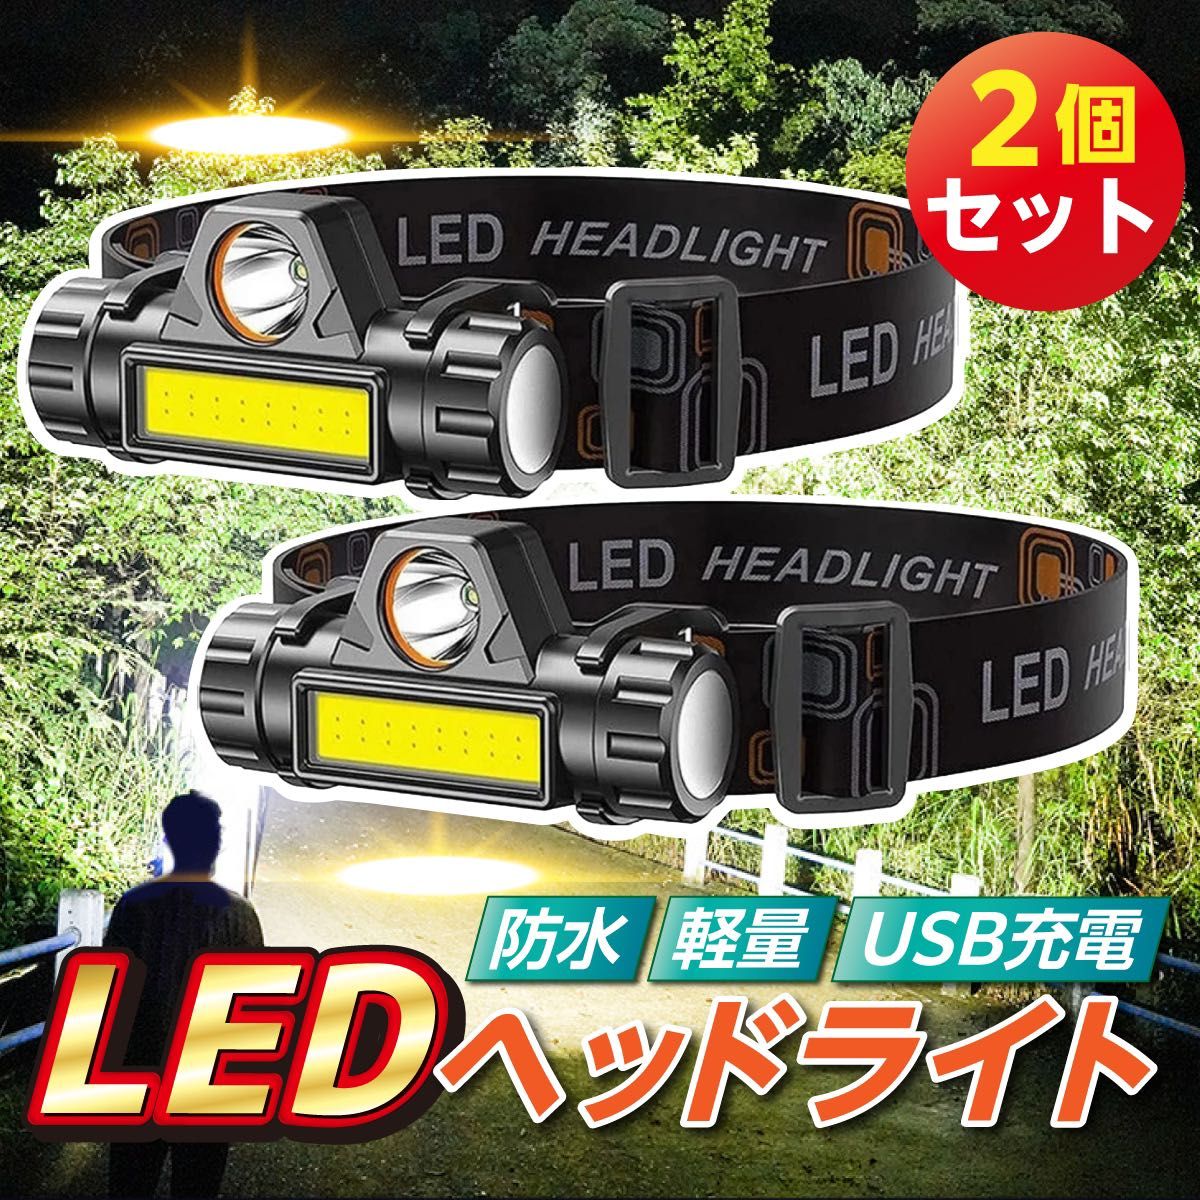 LED ヘッドライト 2個 USB アウトドア 防水 軽量 小型 ランニング 登山 キャンプ LED 夜 防災 高輝度 充電